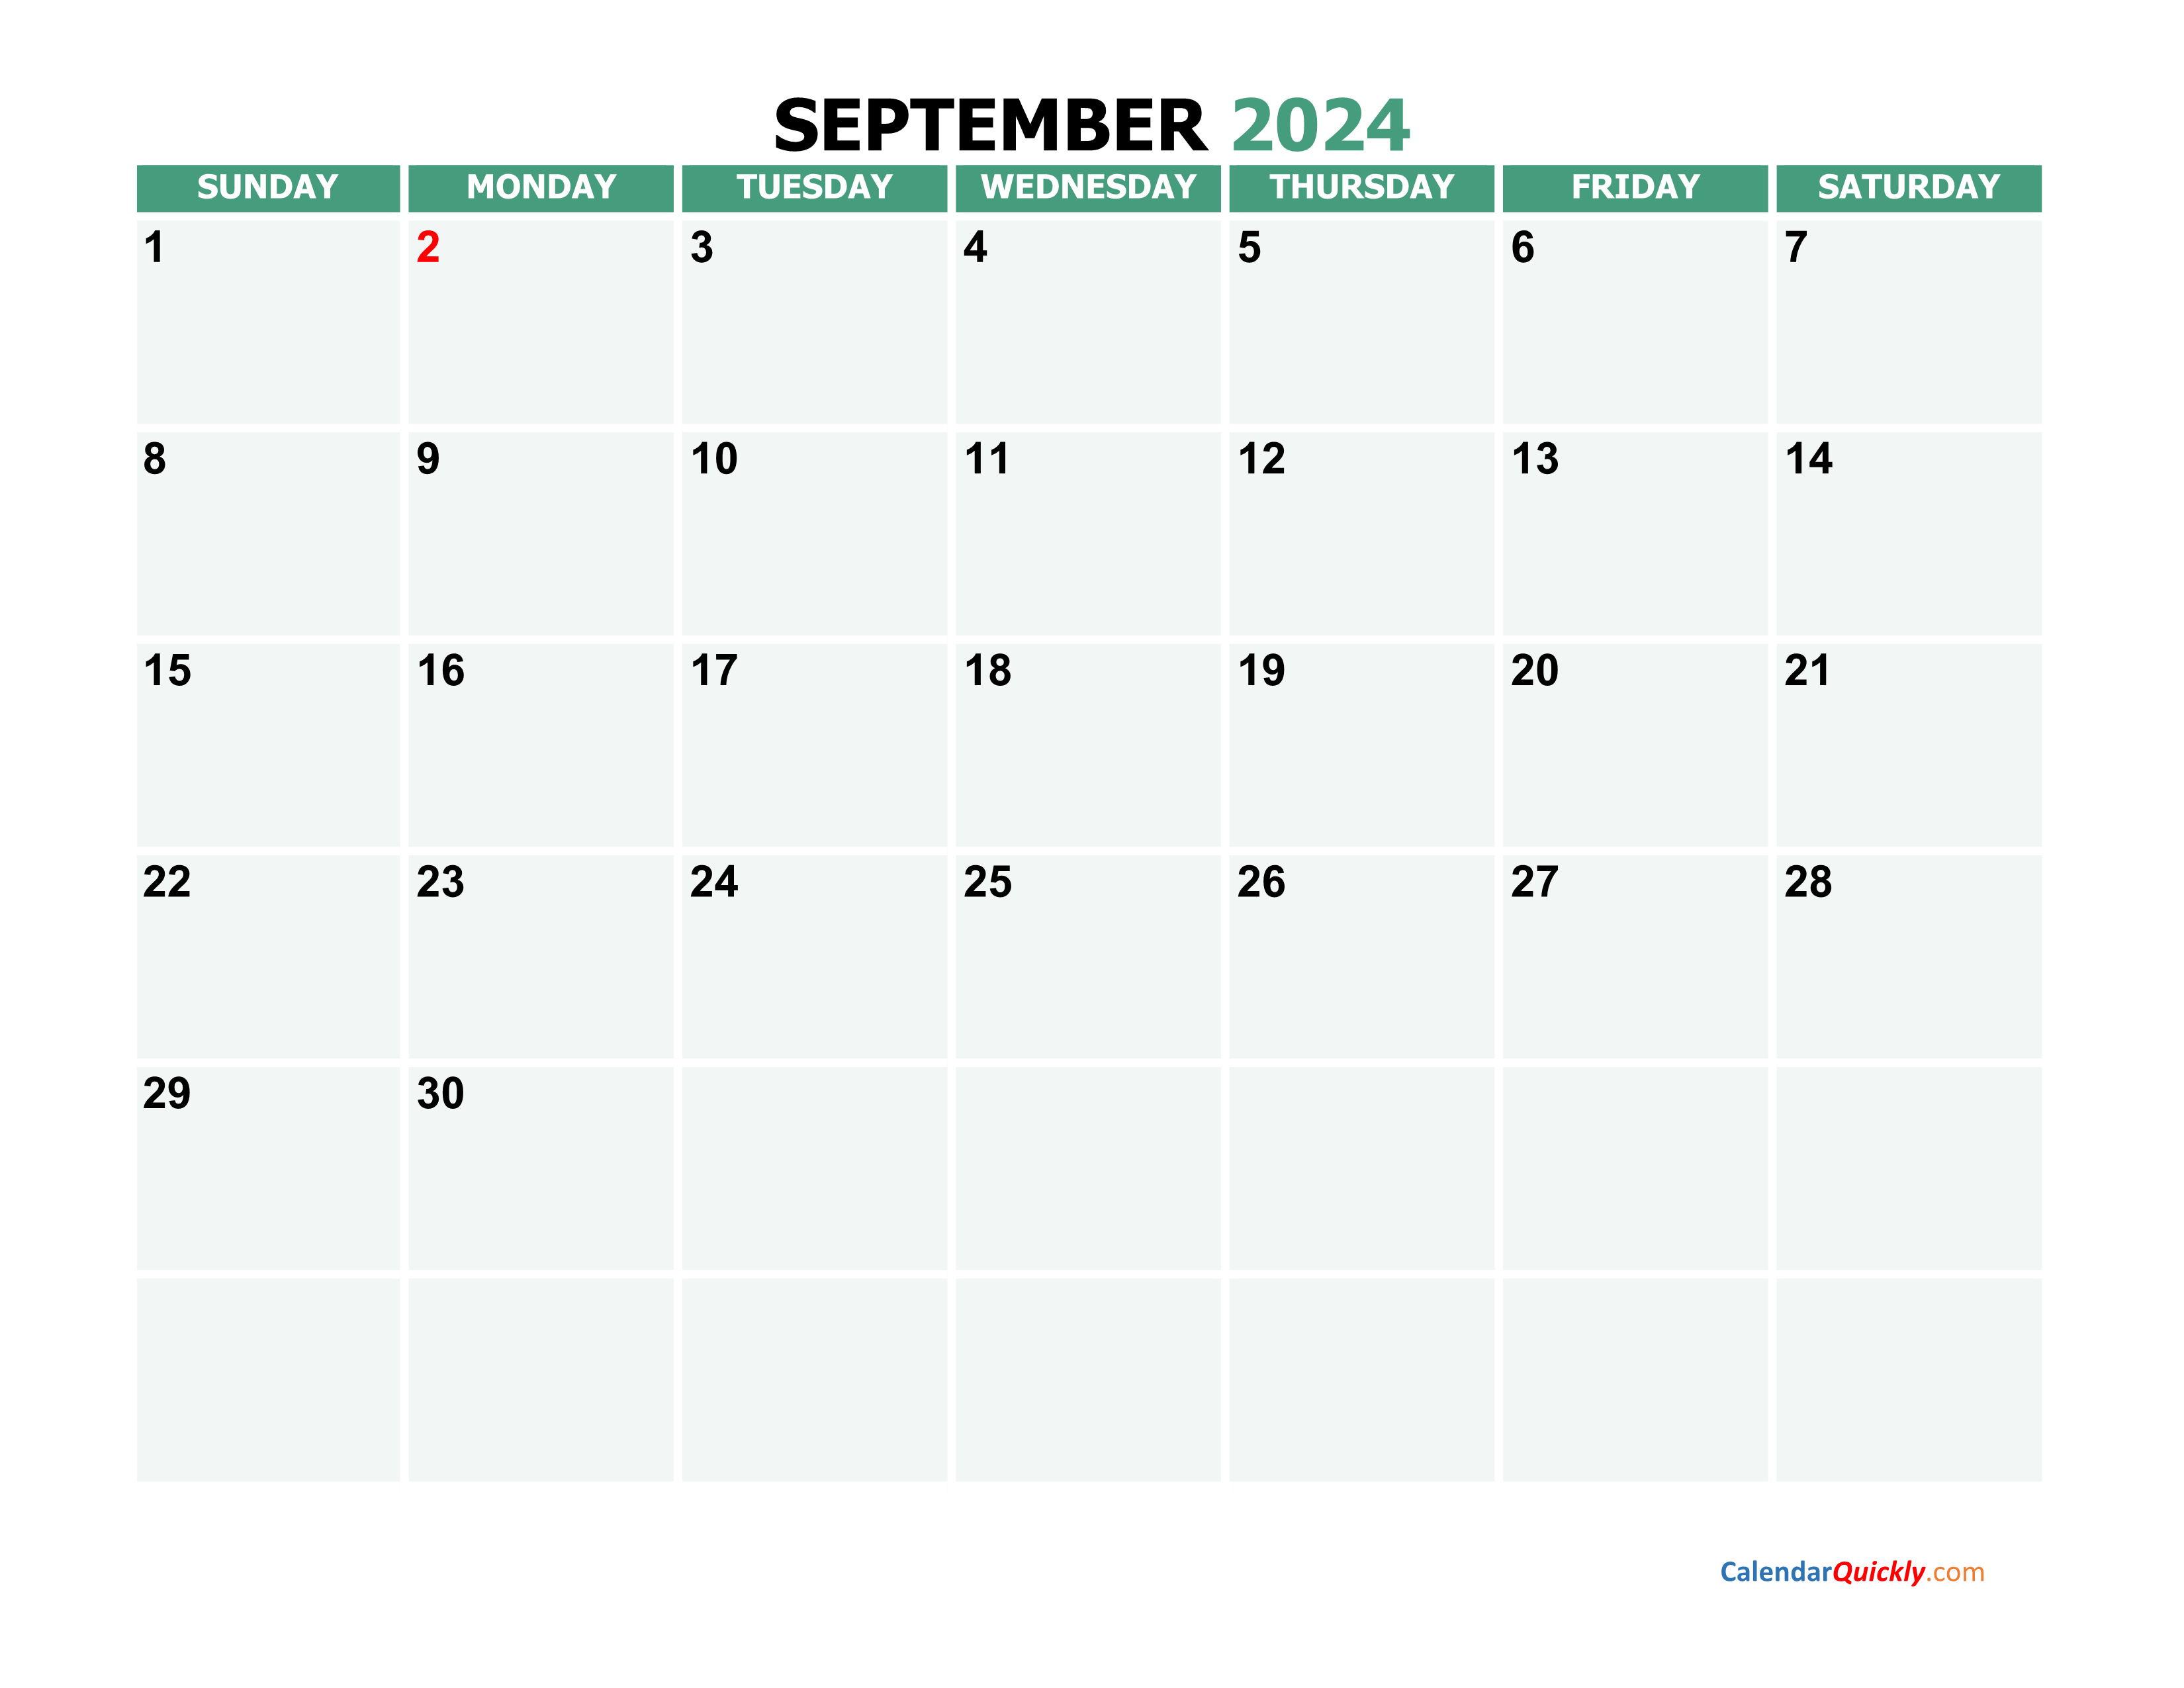 Calendar September 2024 Printable Free Calendar 2024 All Holidays - Free Printable 12 Month Calendar September 2024